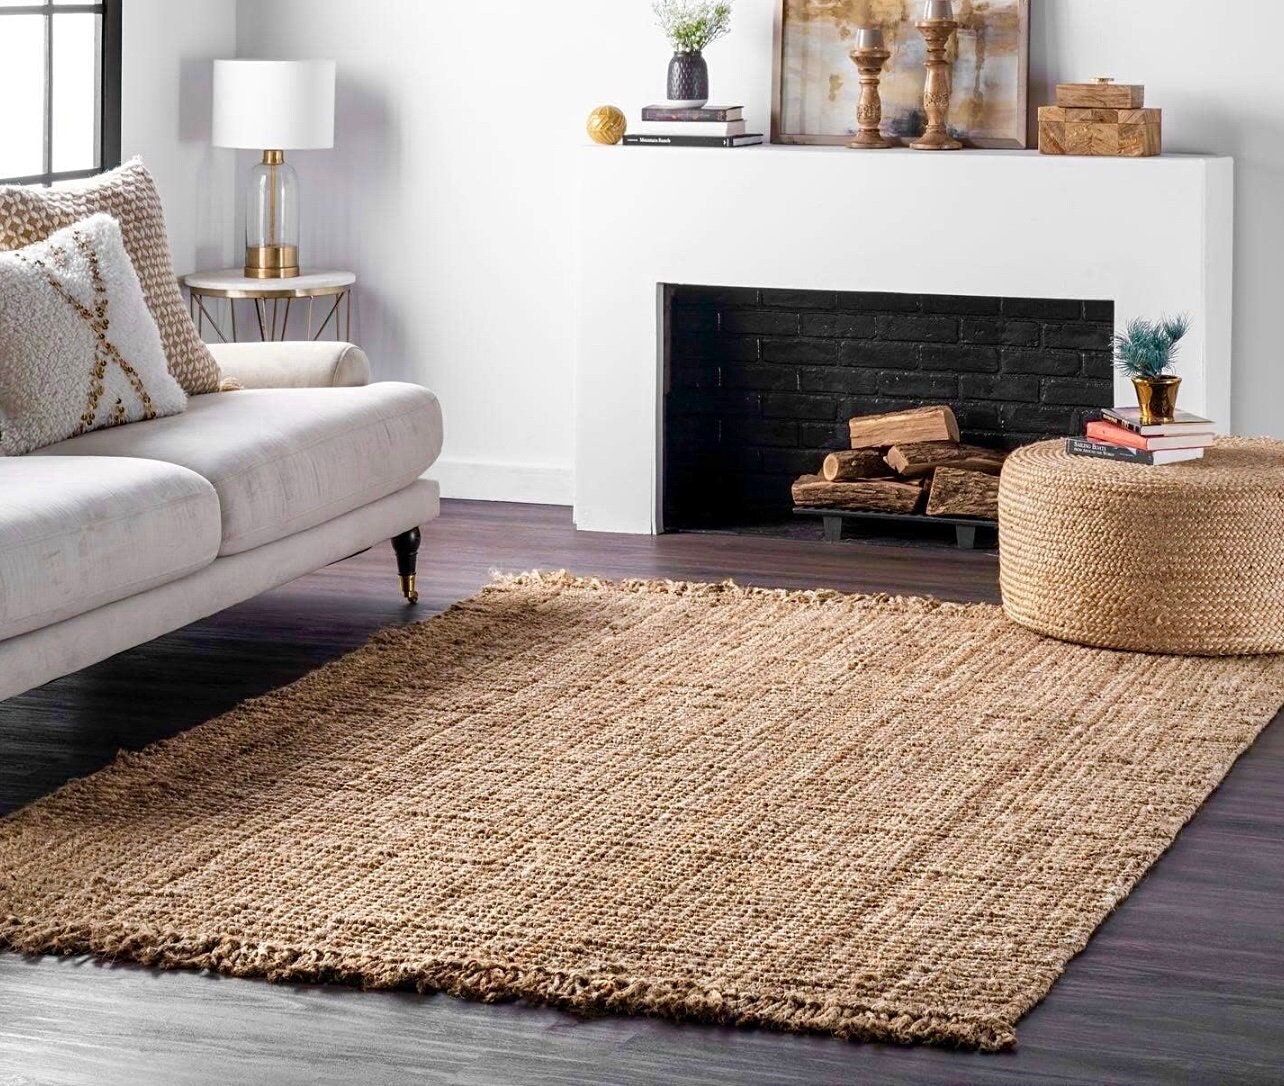 LV Custom Rug, biggest rug l've done so far 6X5ft - - Sold